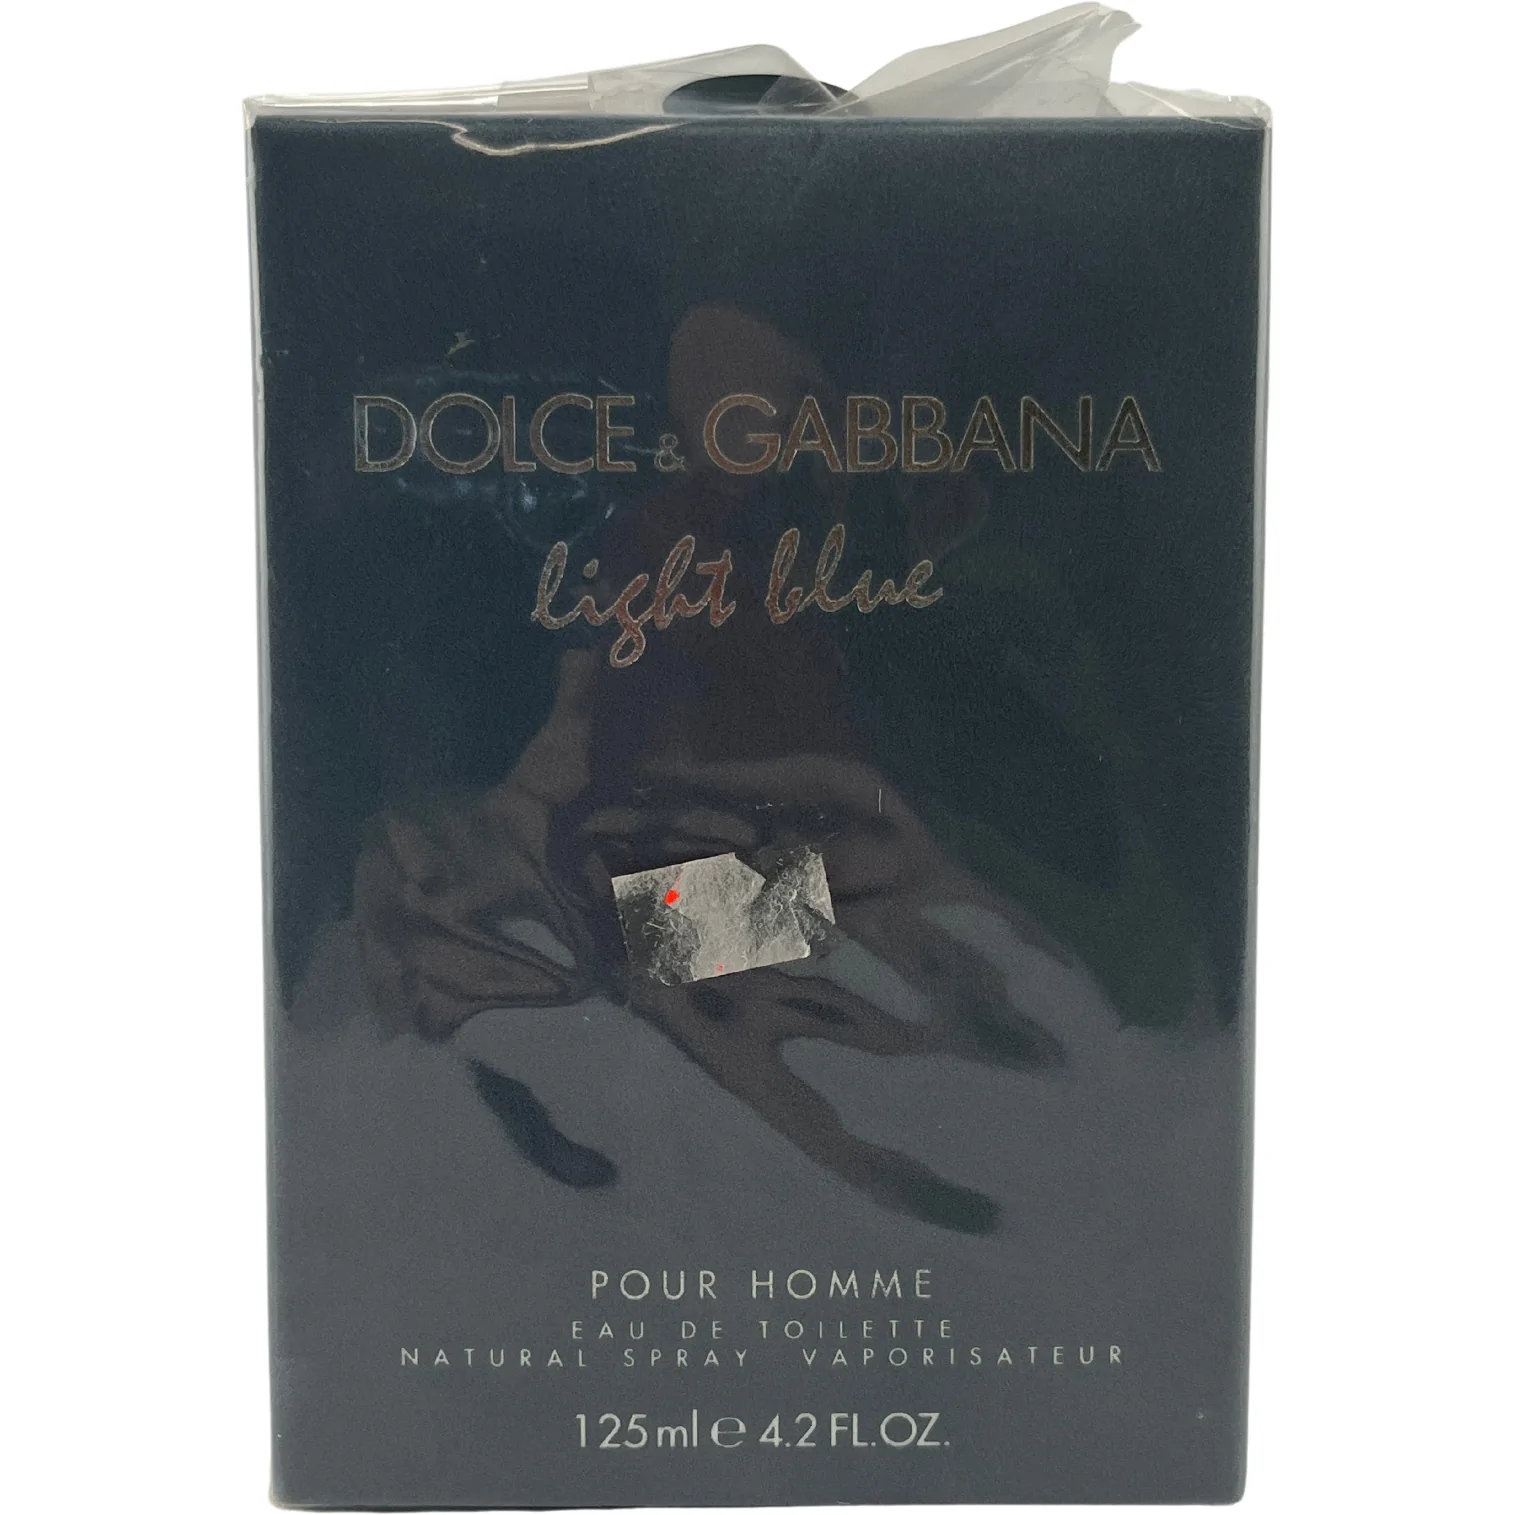 Light Blue by Dolce & Gabbana Men's Perfume